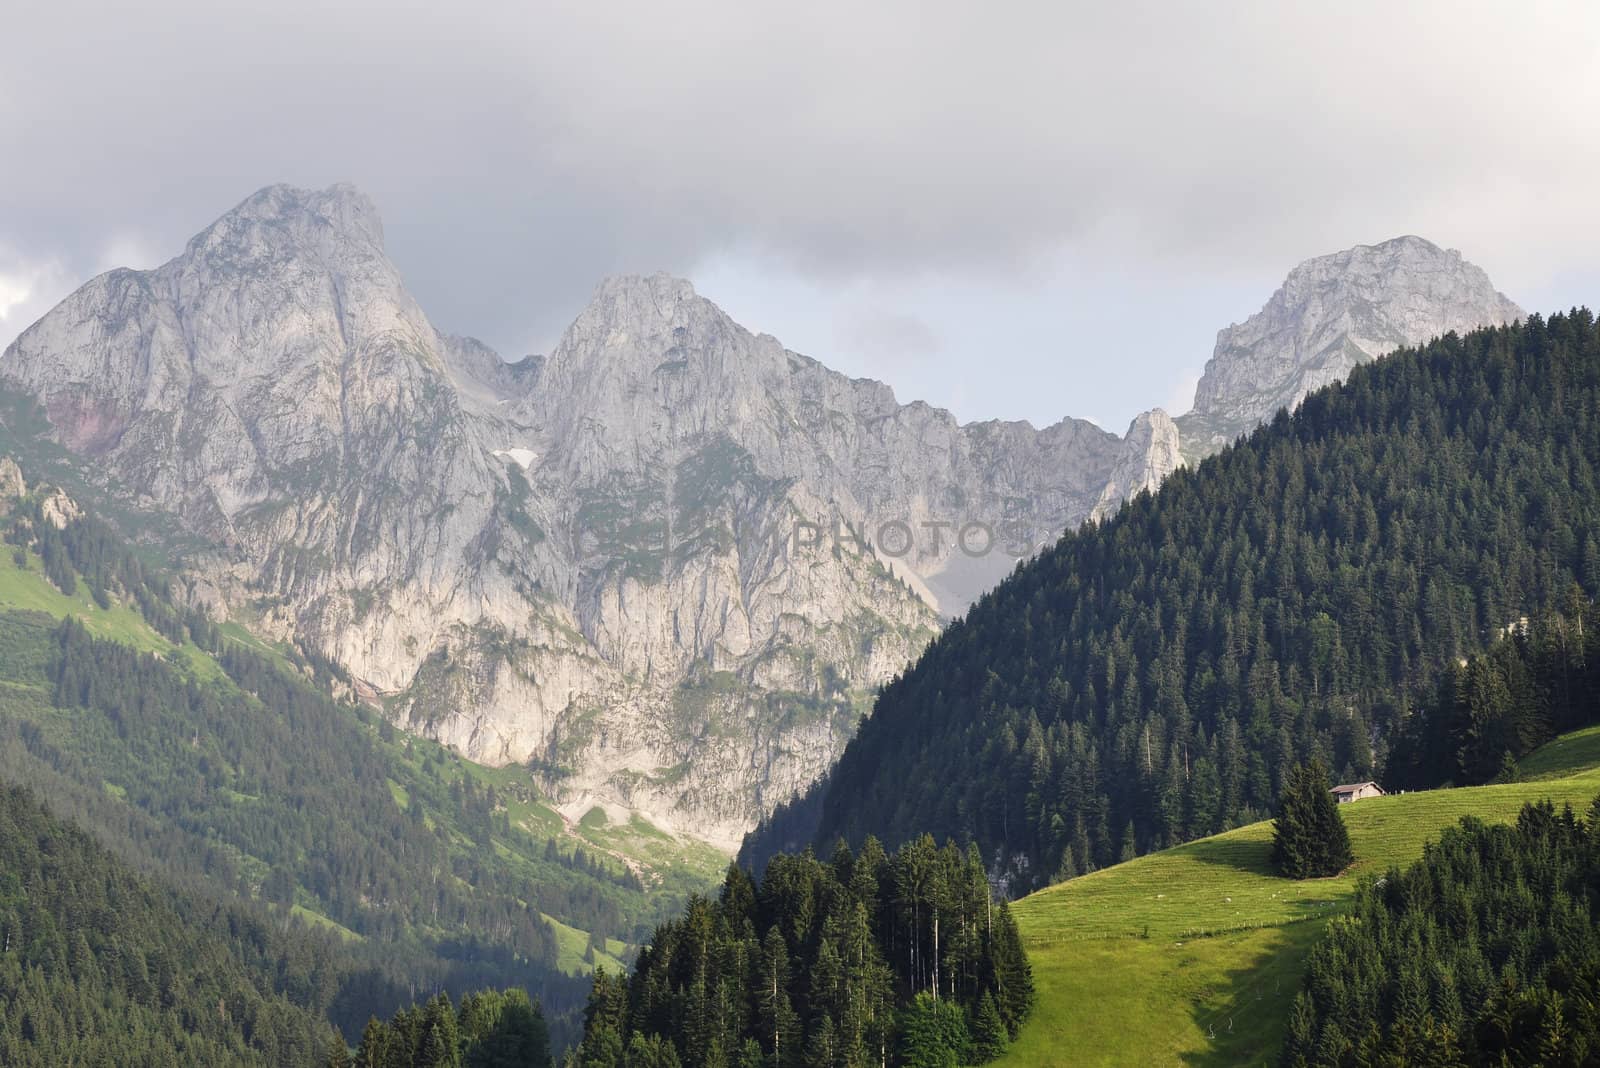 A beautiful Swiss landscape